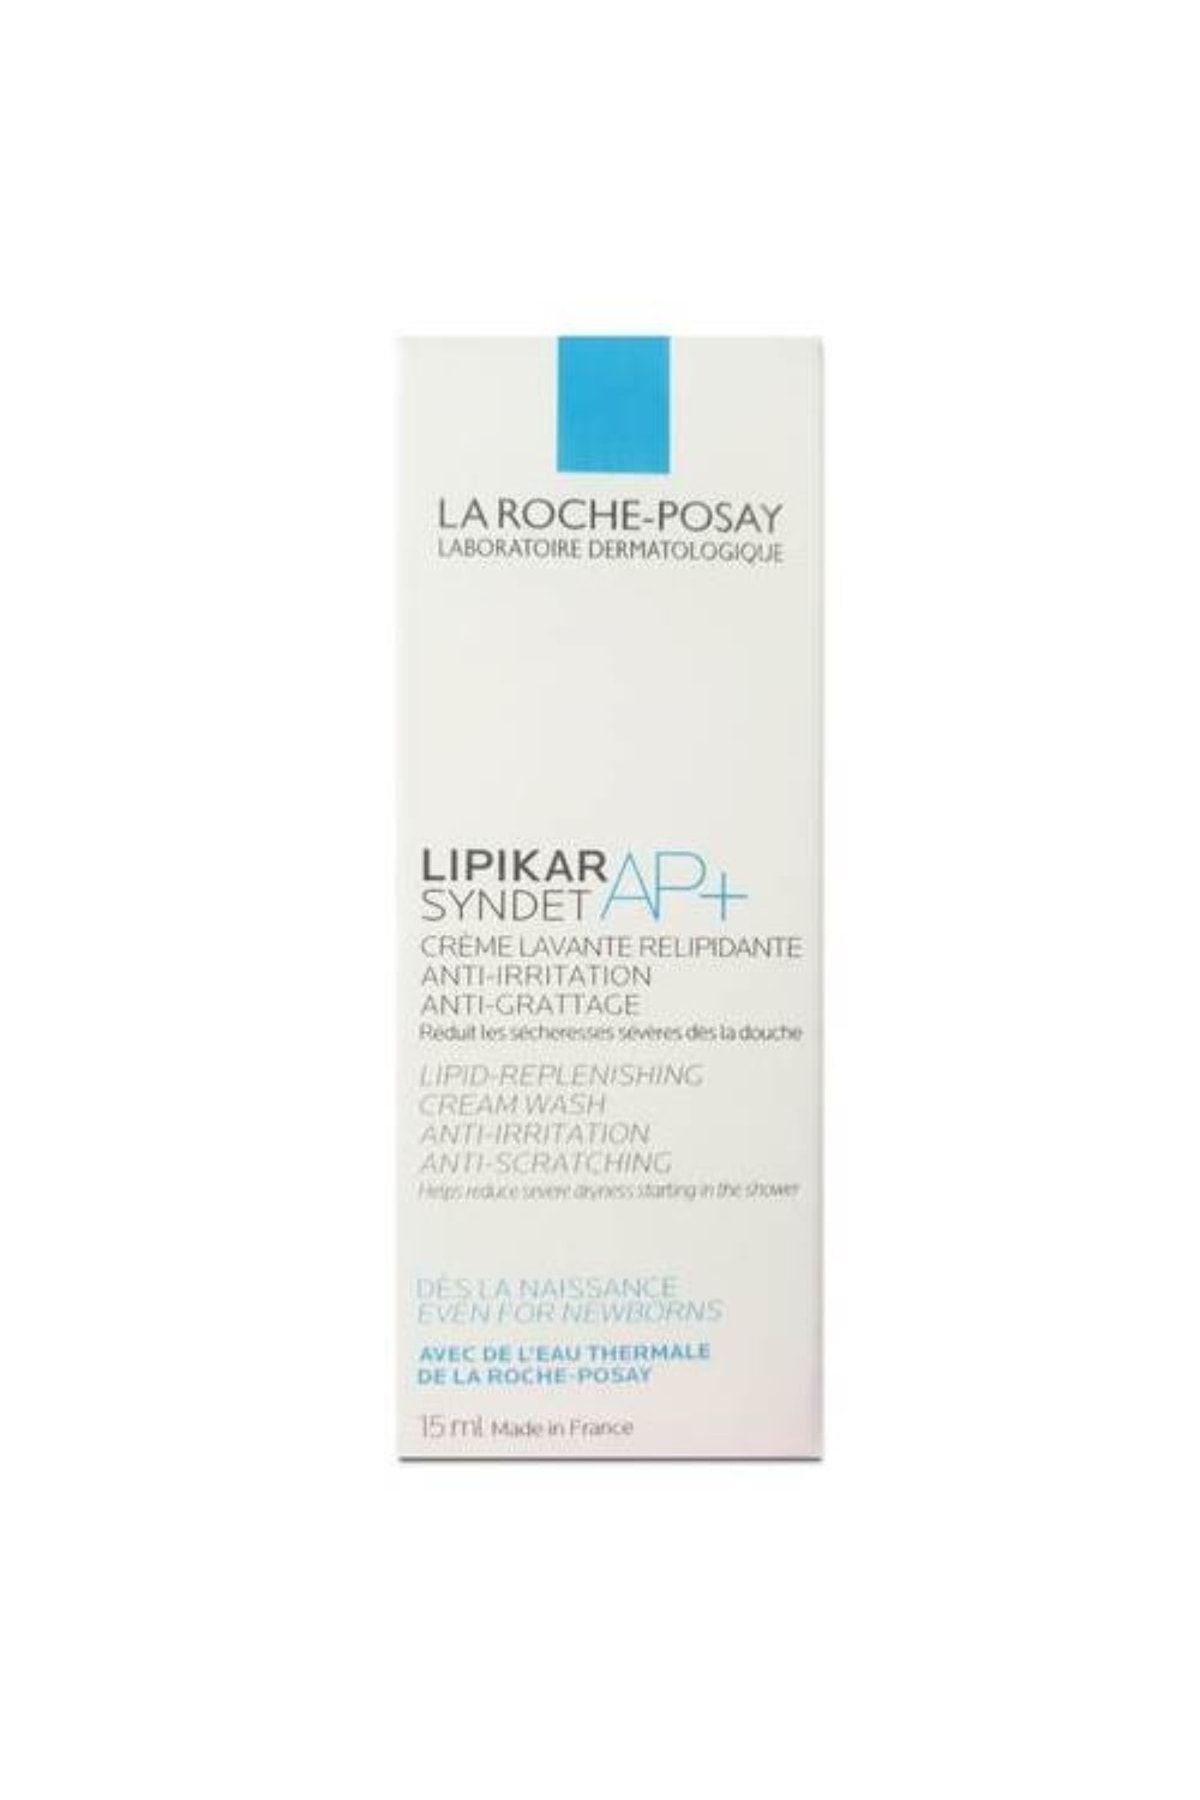 La Roche Posay Lipikar Syndet Ap+ - Vücut Yıkama Jeli 15ml